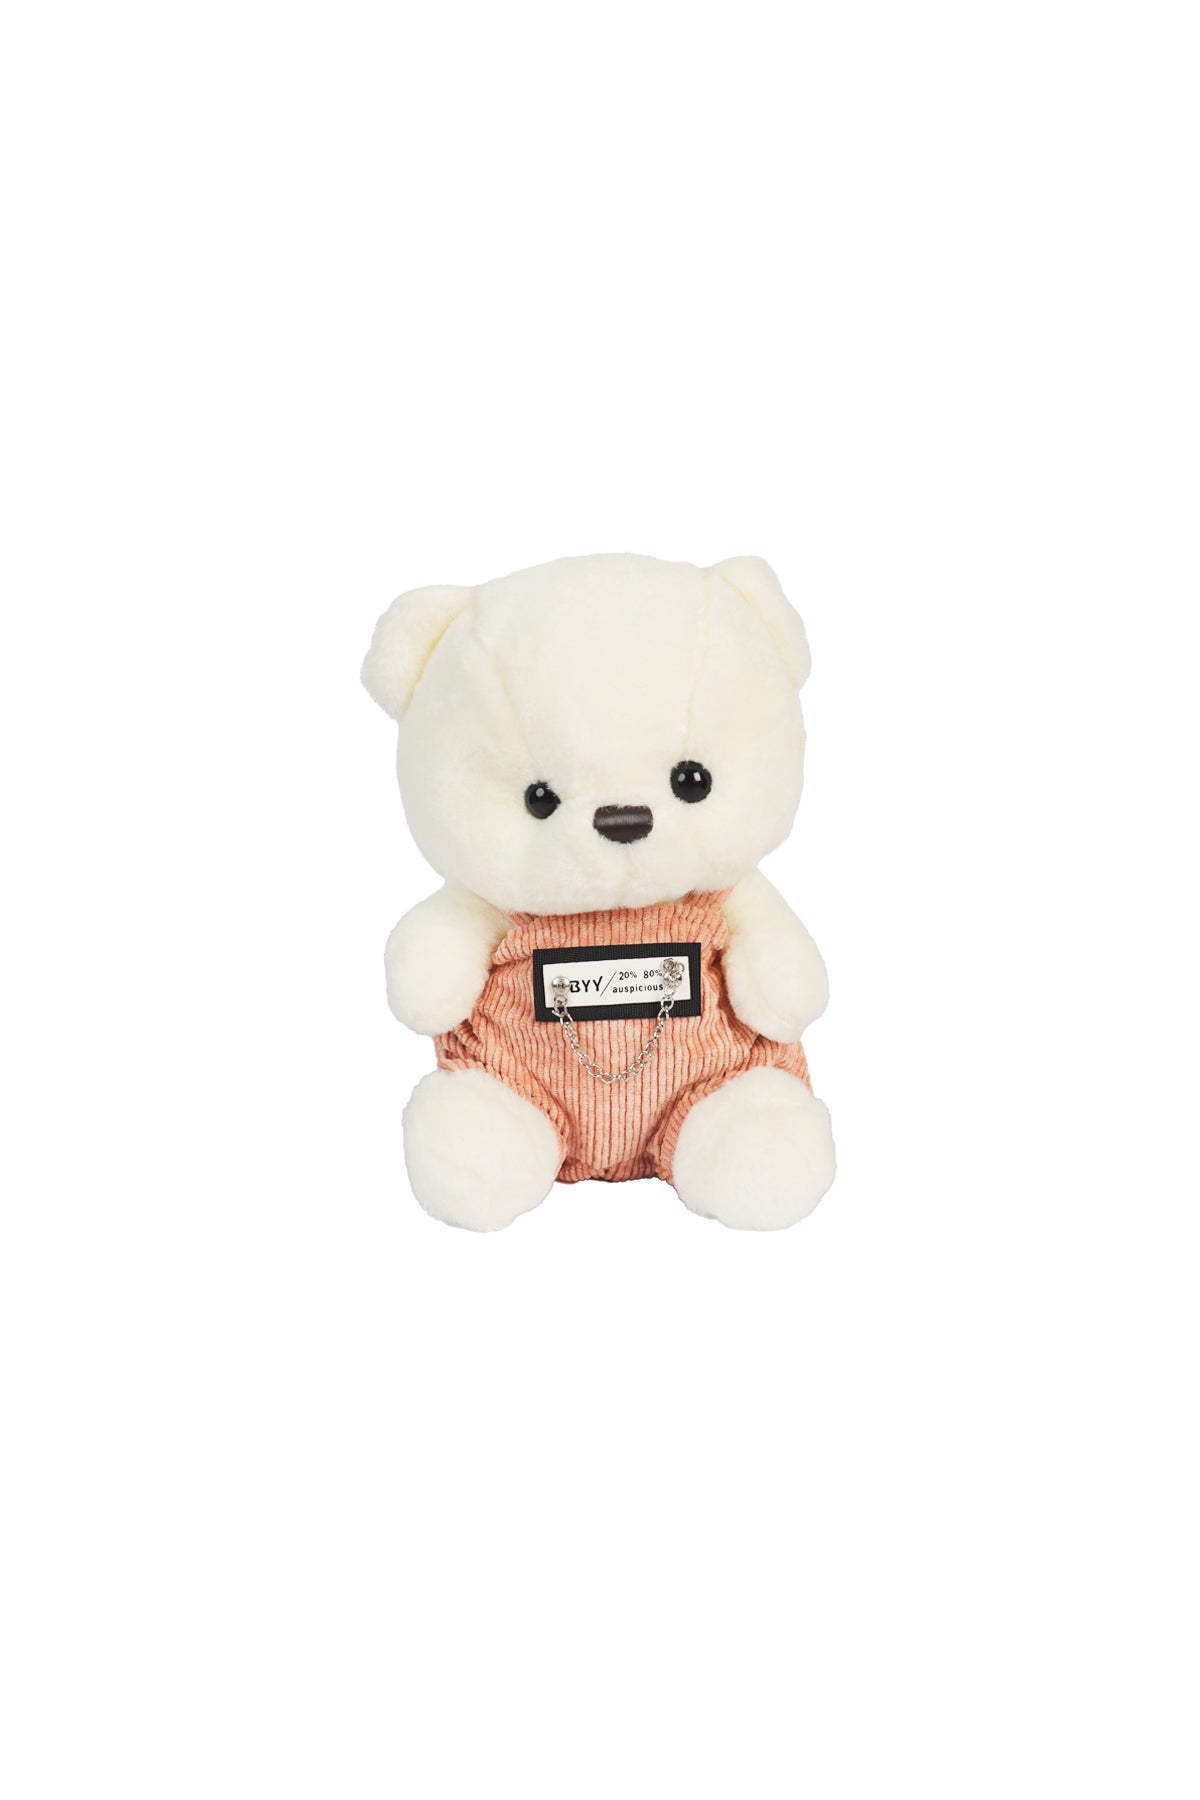 Stuffed Soft Teddy Bears Toy